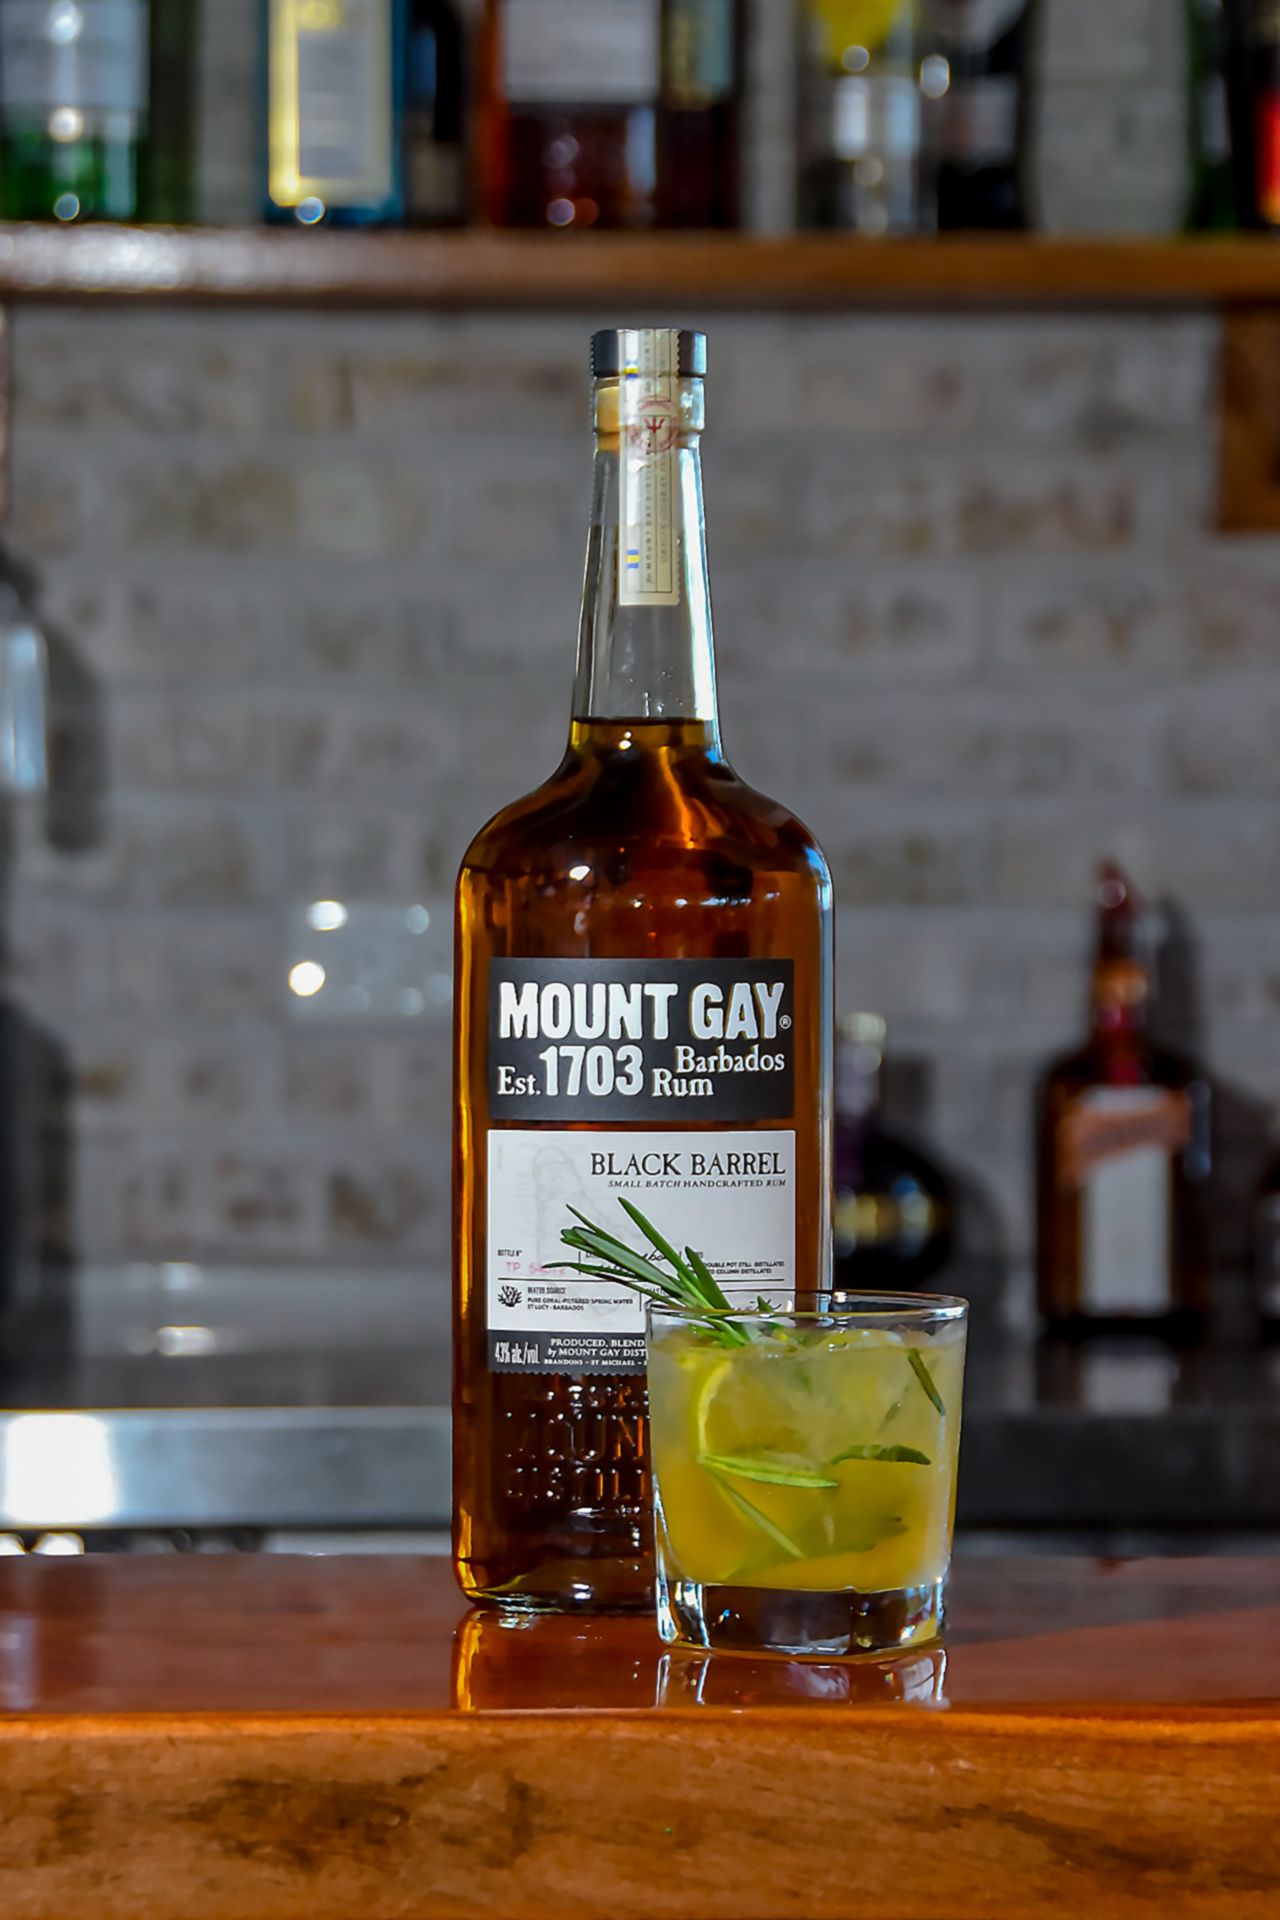 Mount Gay rosemary rum sour at Sandals Royal Barbados